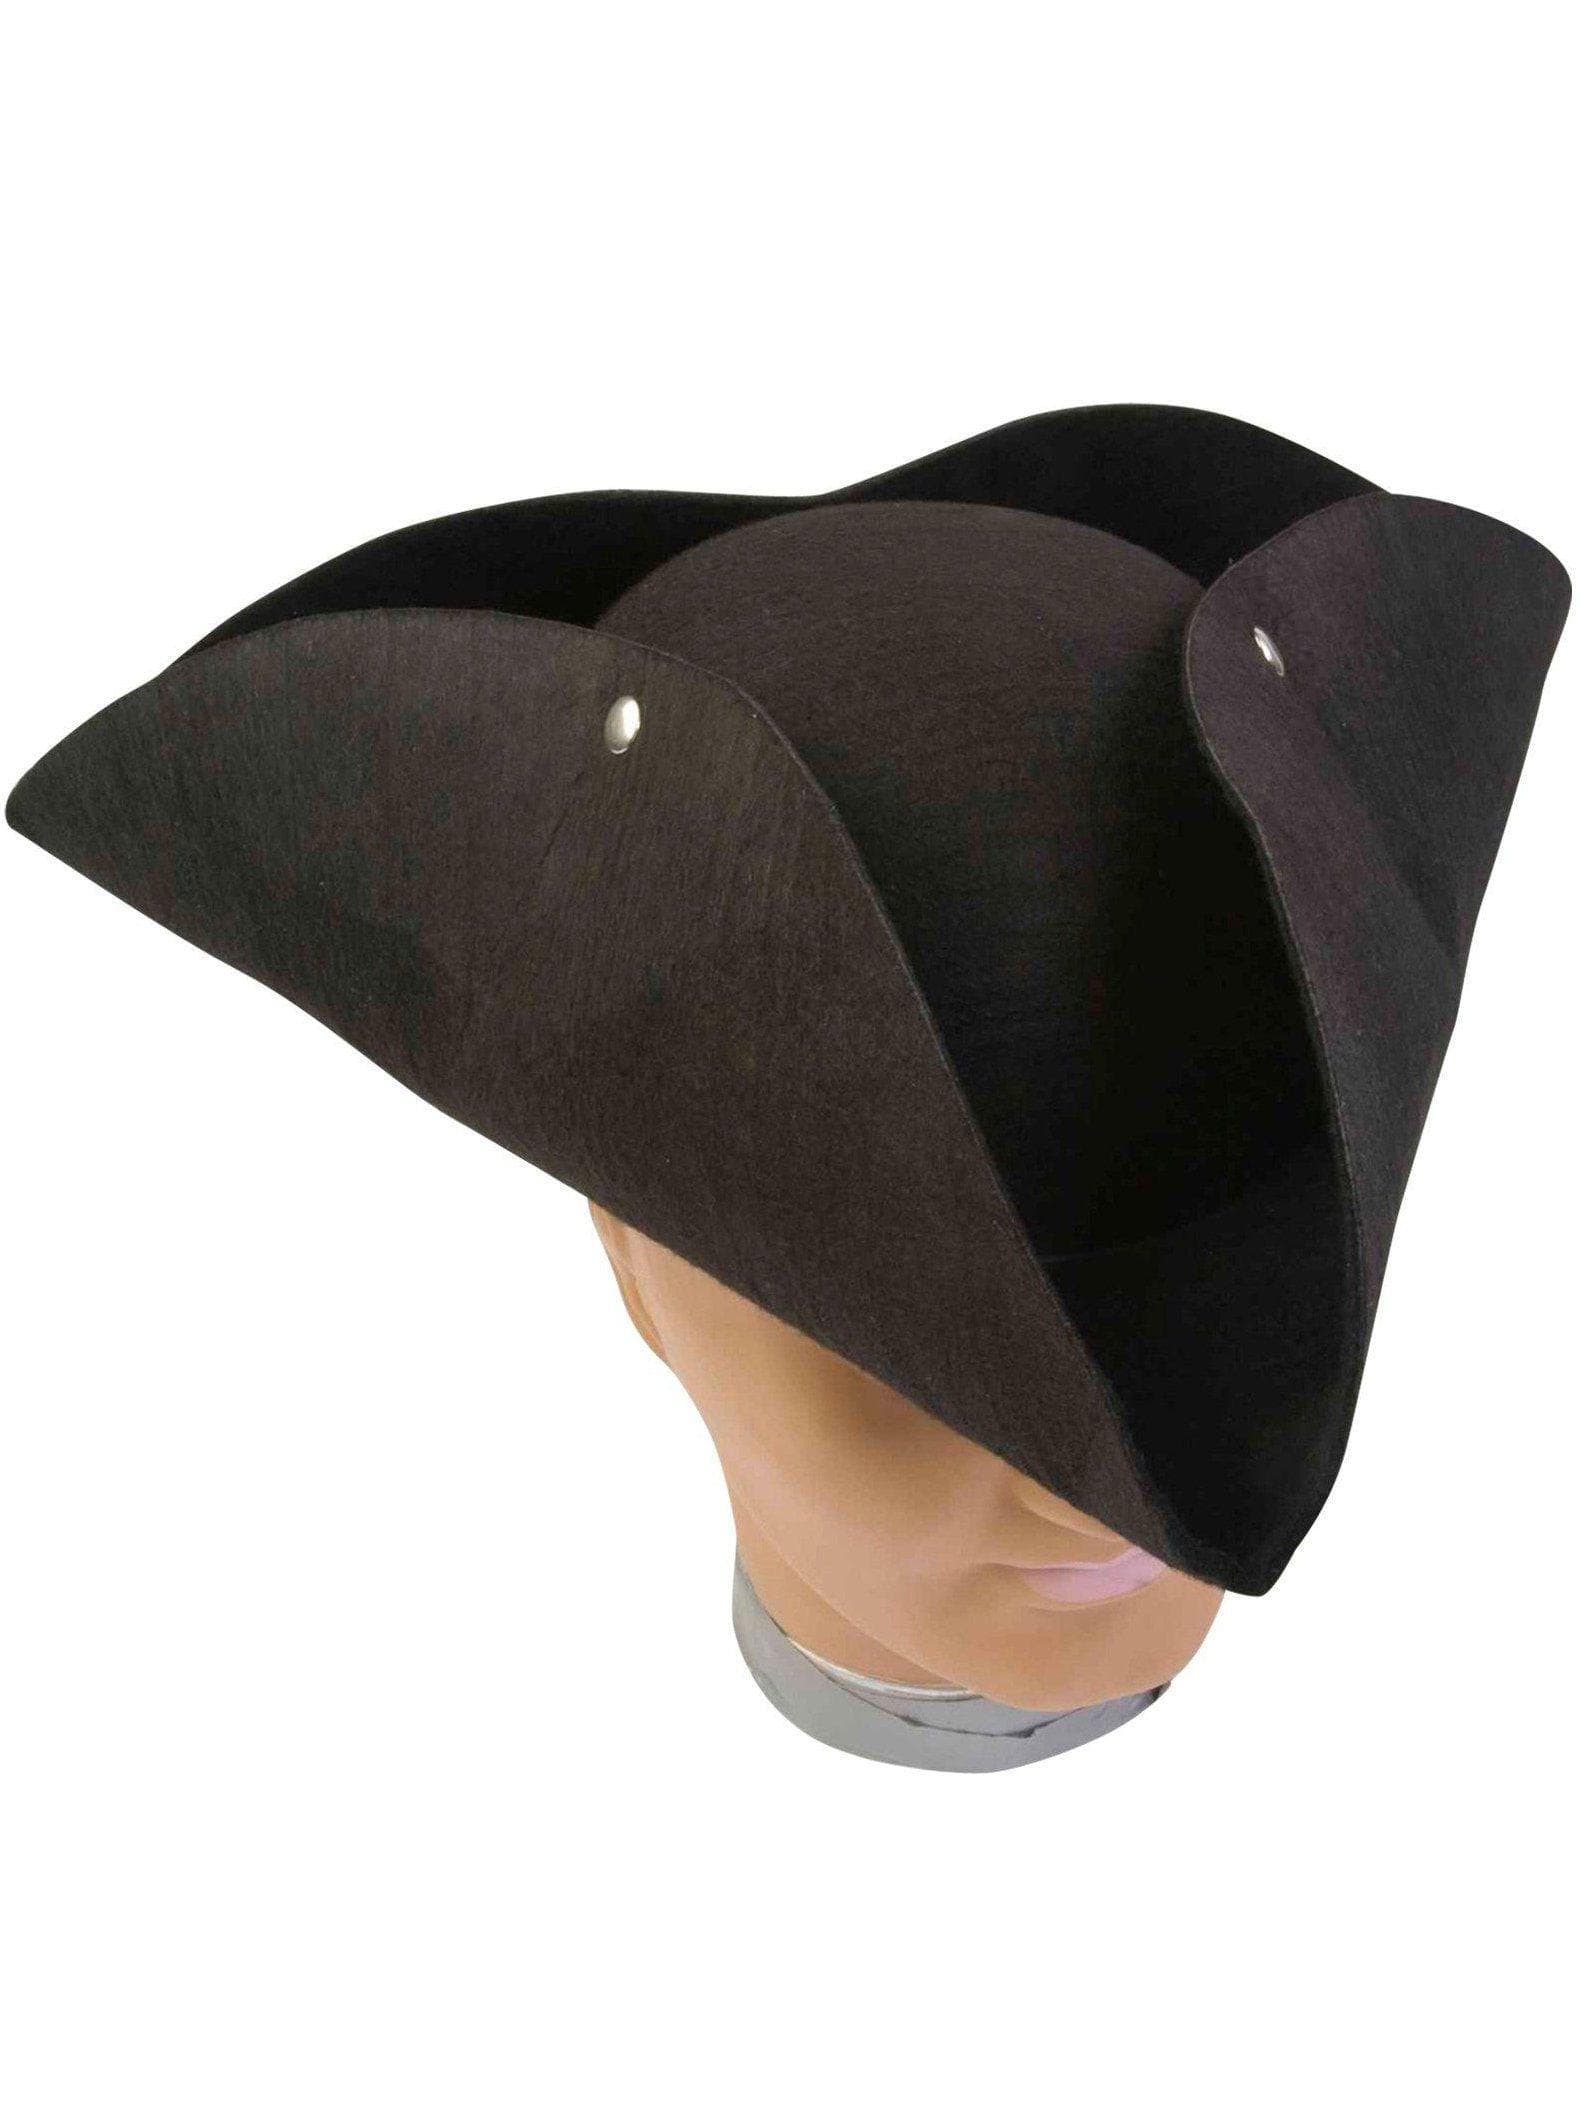 Adult Black Tricorn Pirate Hat - costumes.com